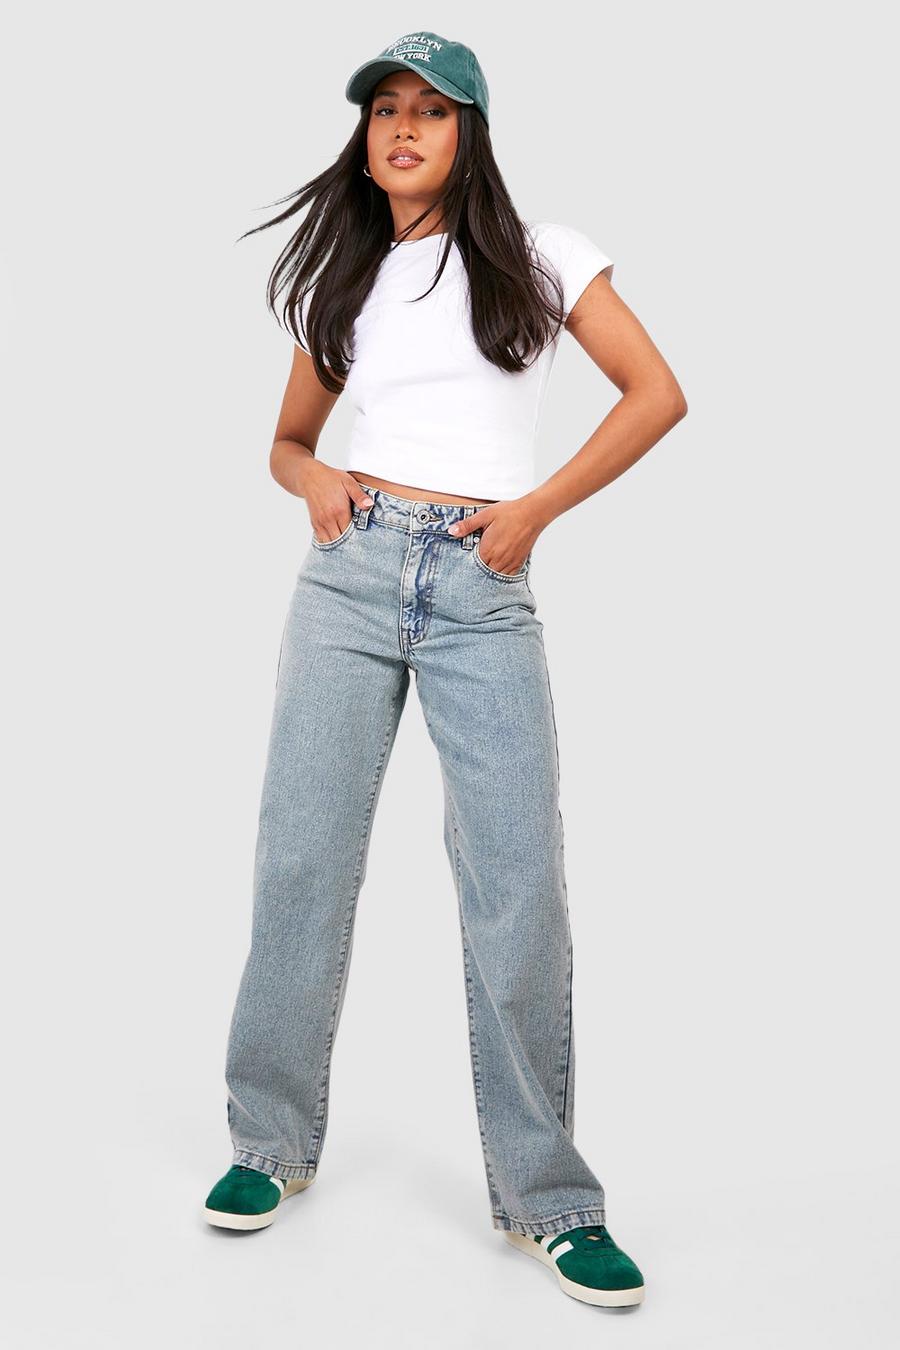 Petite Jeans, Women's Petite Jeans